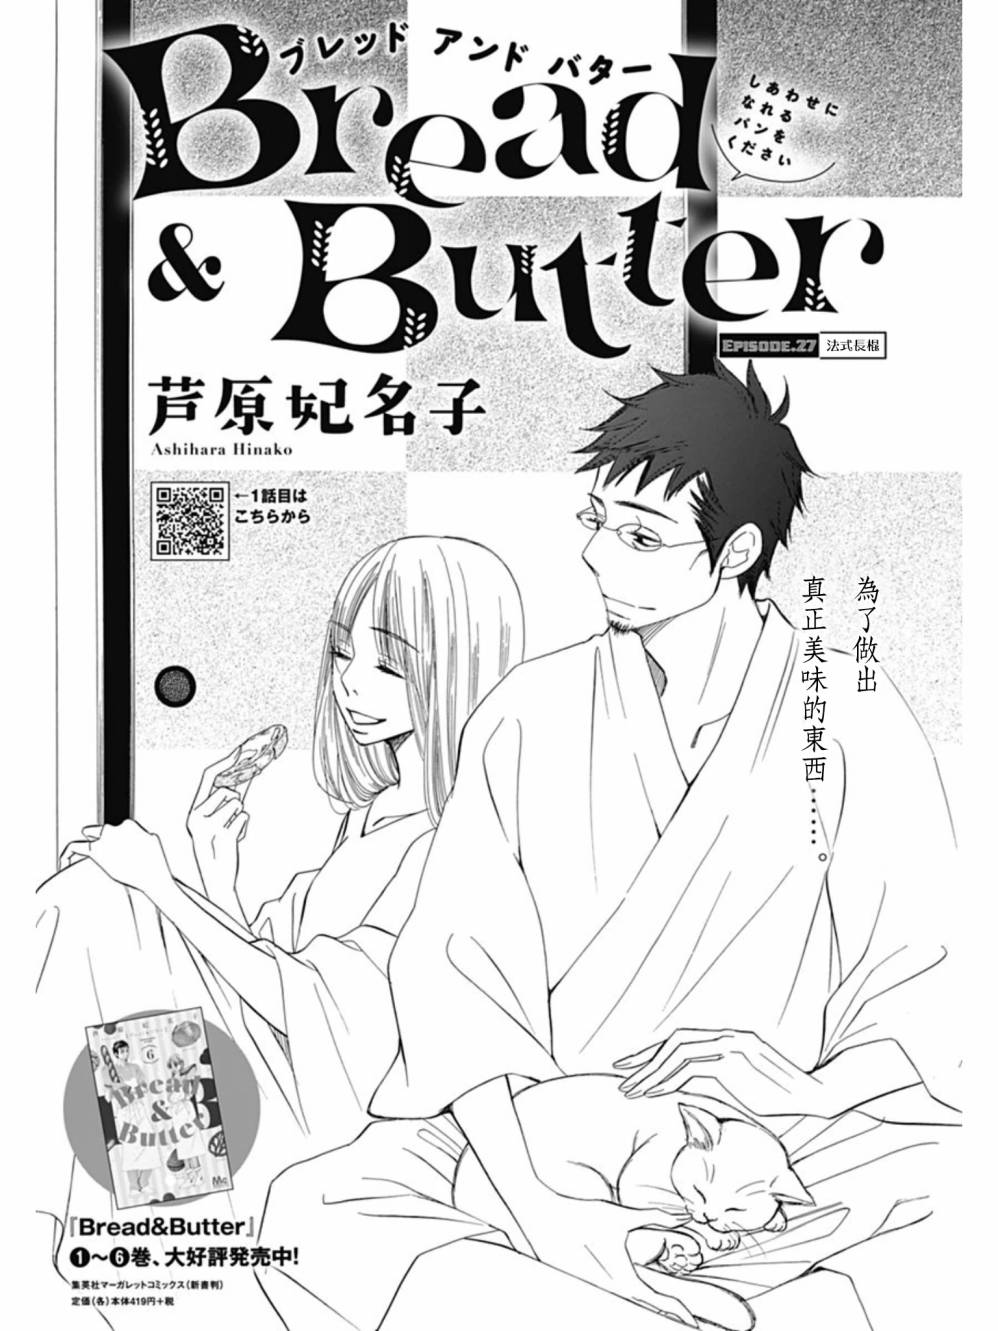 Bread Butter 第27話 漫畫線上看 動漫戲說 Acgn Cc